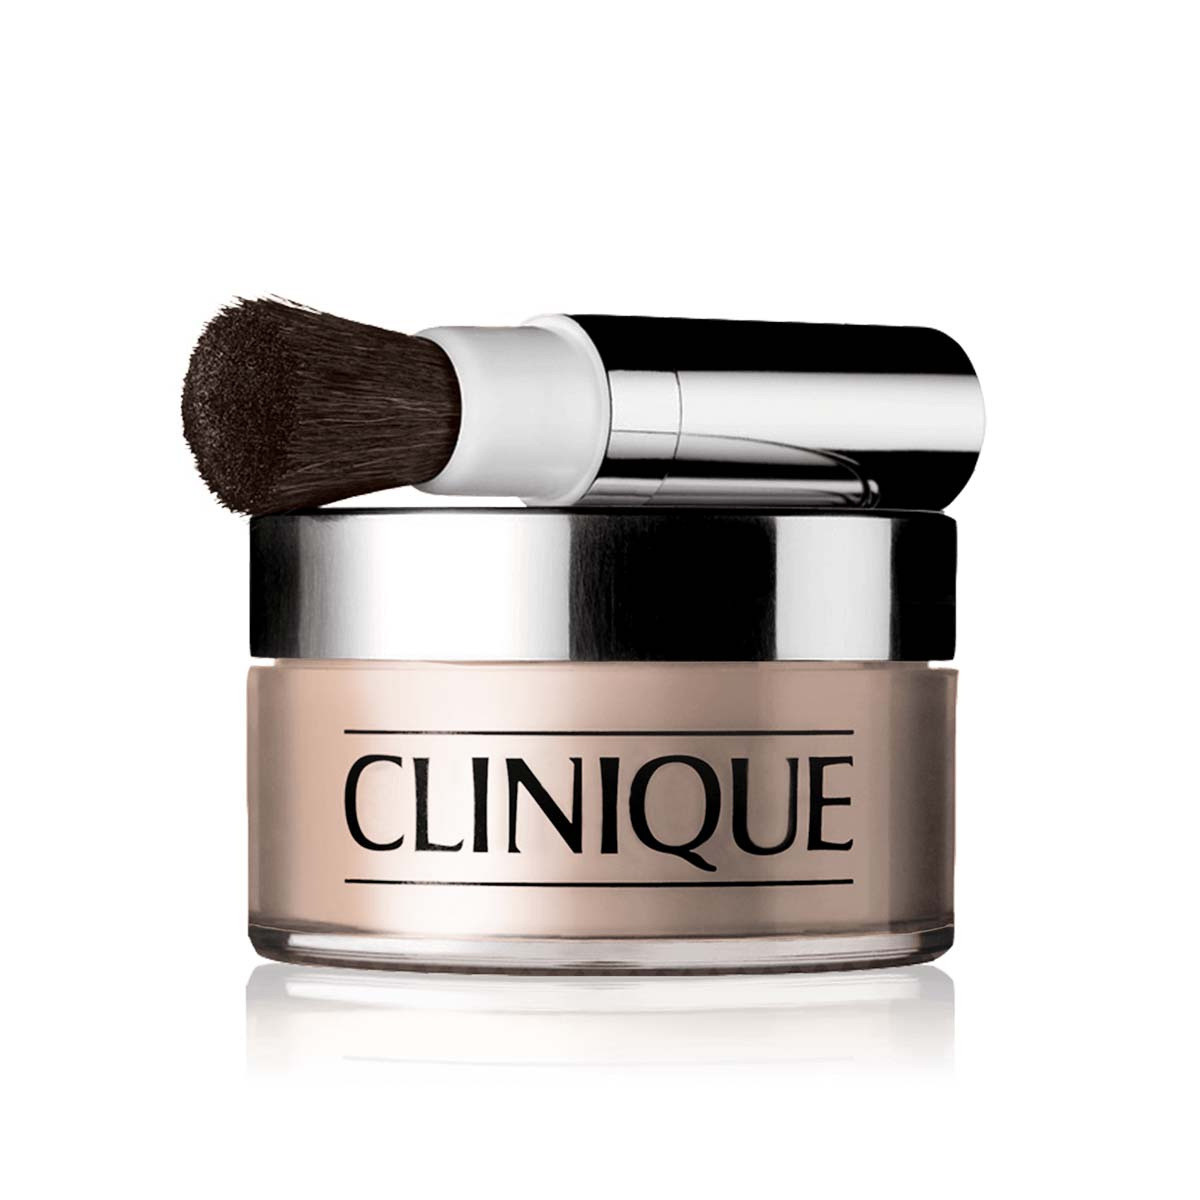 Clinique blended face powder trasparency 02, 02 CLINIQUE, large